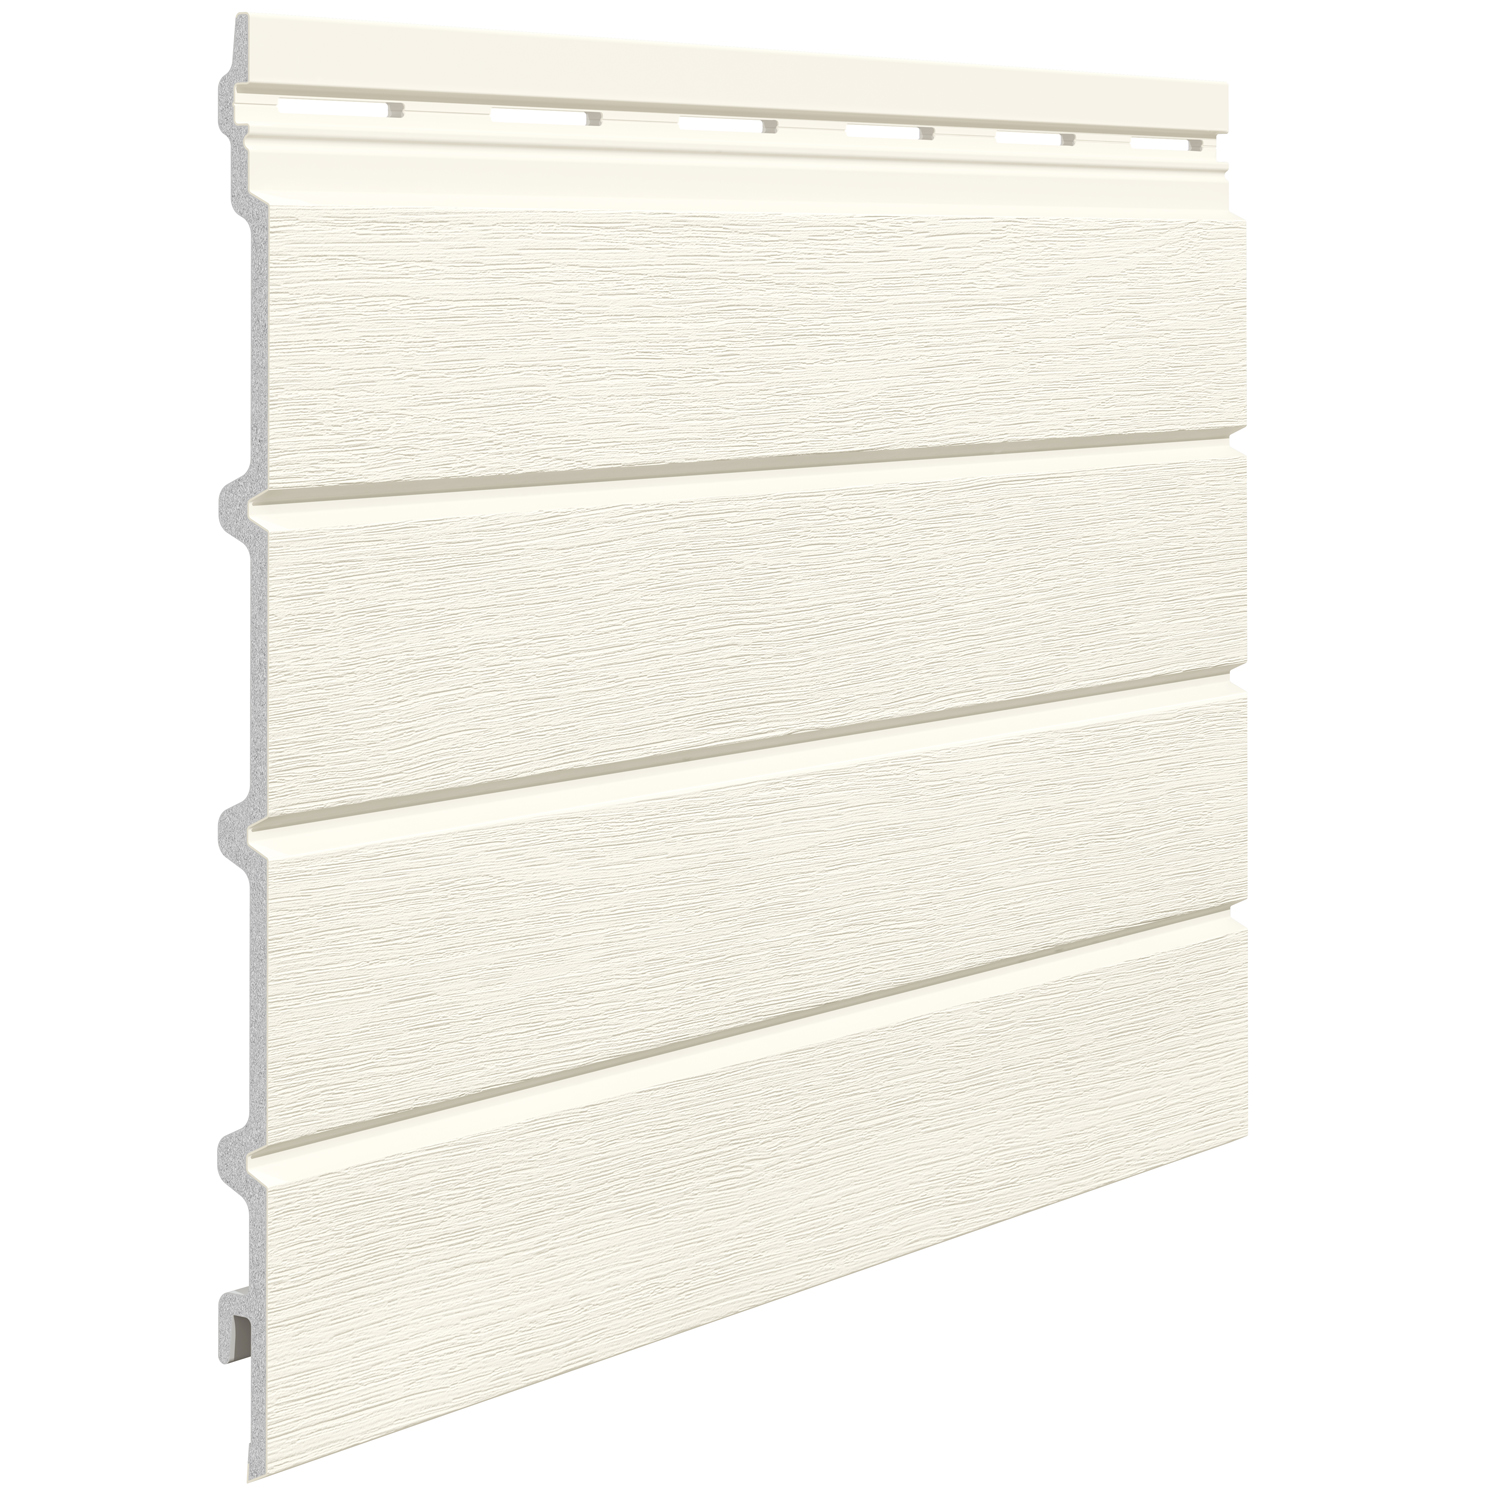 Facade cladding, Kerrafront, Modern Wood, White, fourfold panel